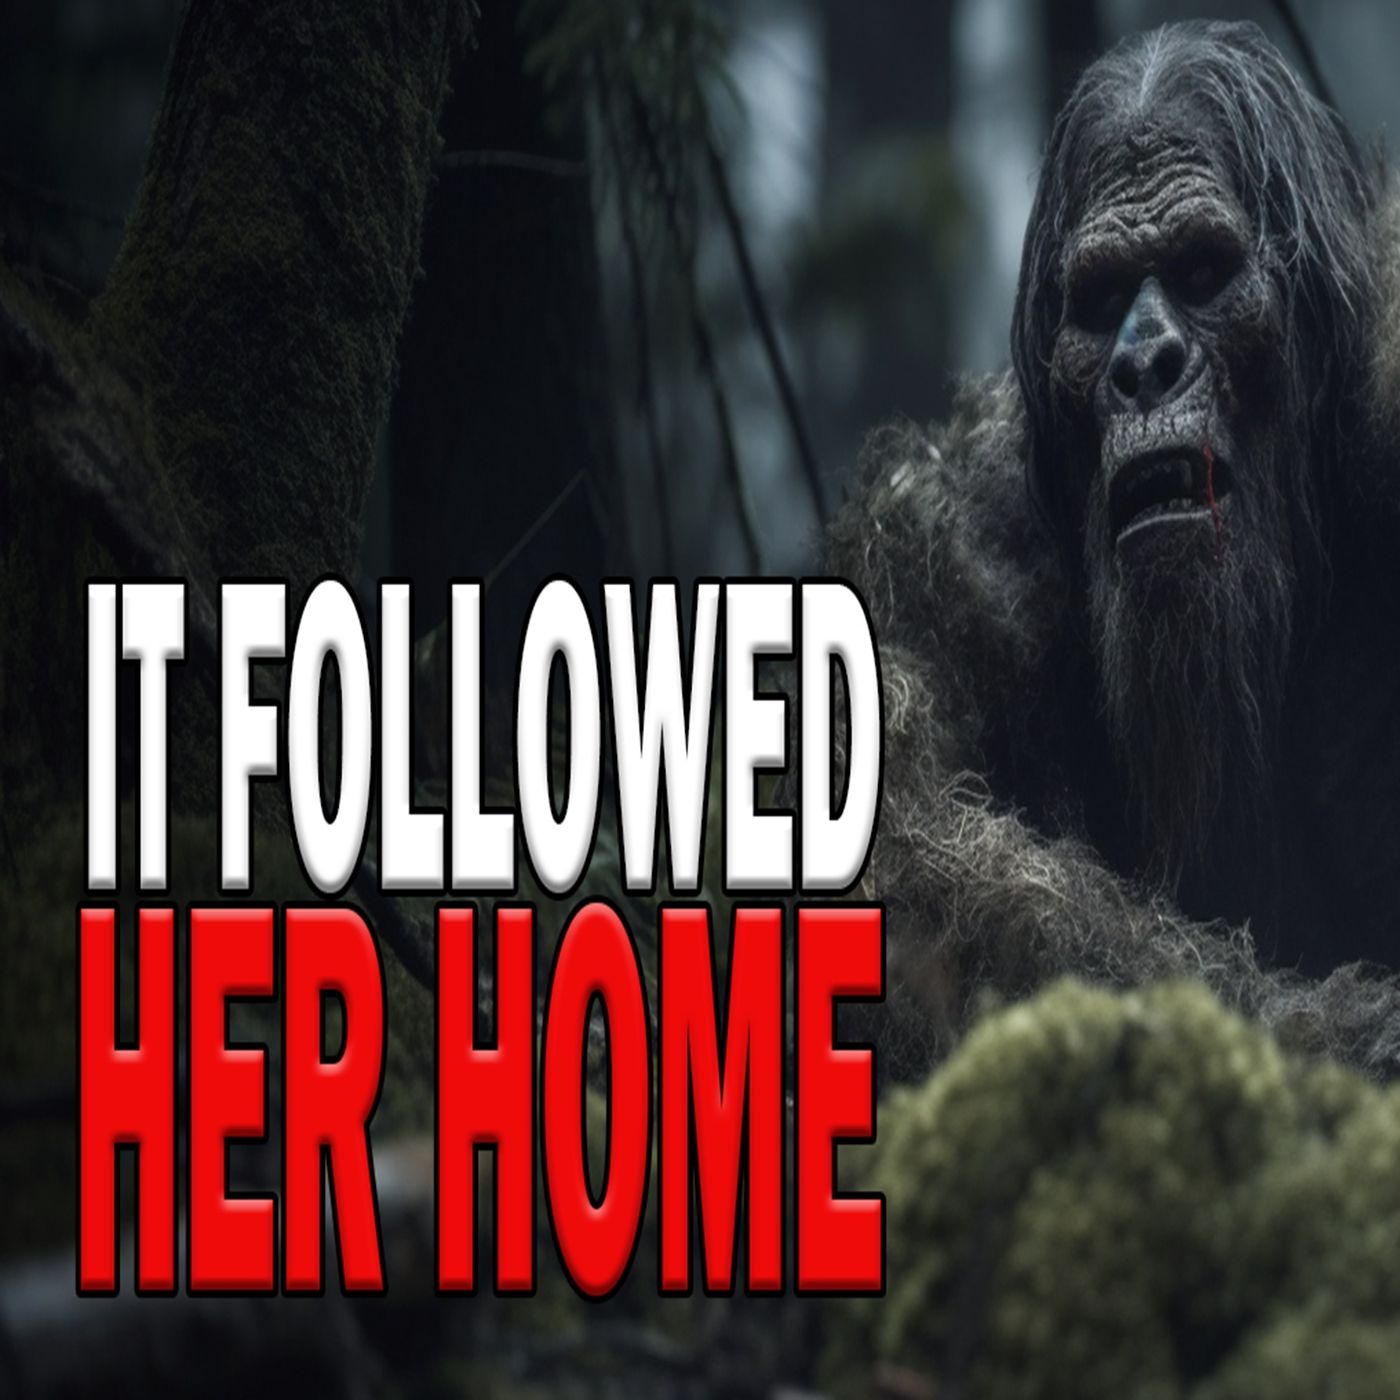 It Followed Her Home - Bigfoot